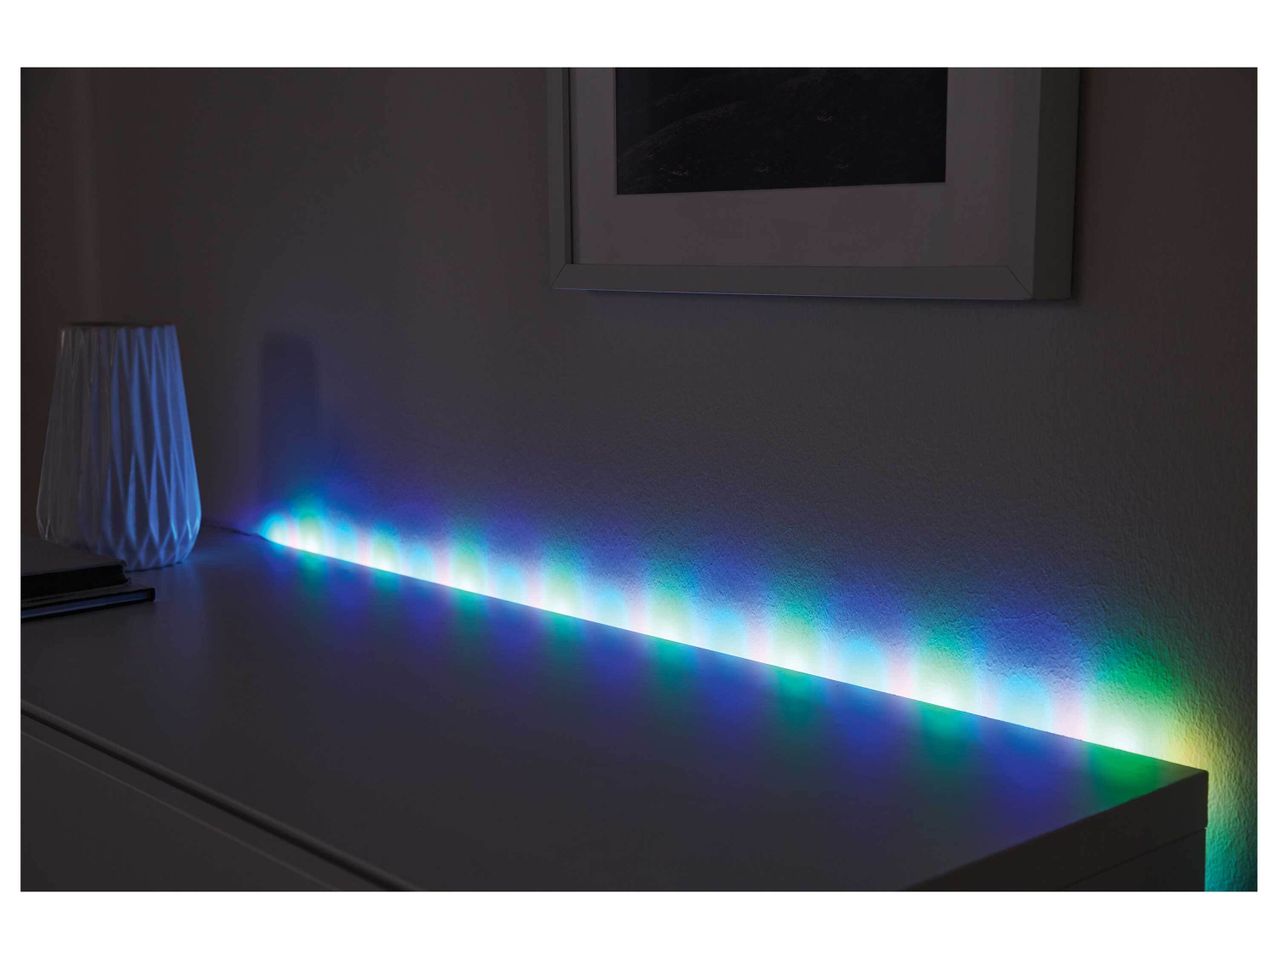 Ruban LED , prezzo 6.99 EUR 
Ruban LED 
- Au choix :
- Pour de jolis effets lumineux ...